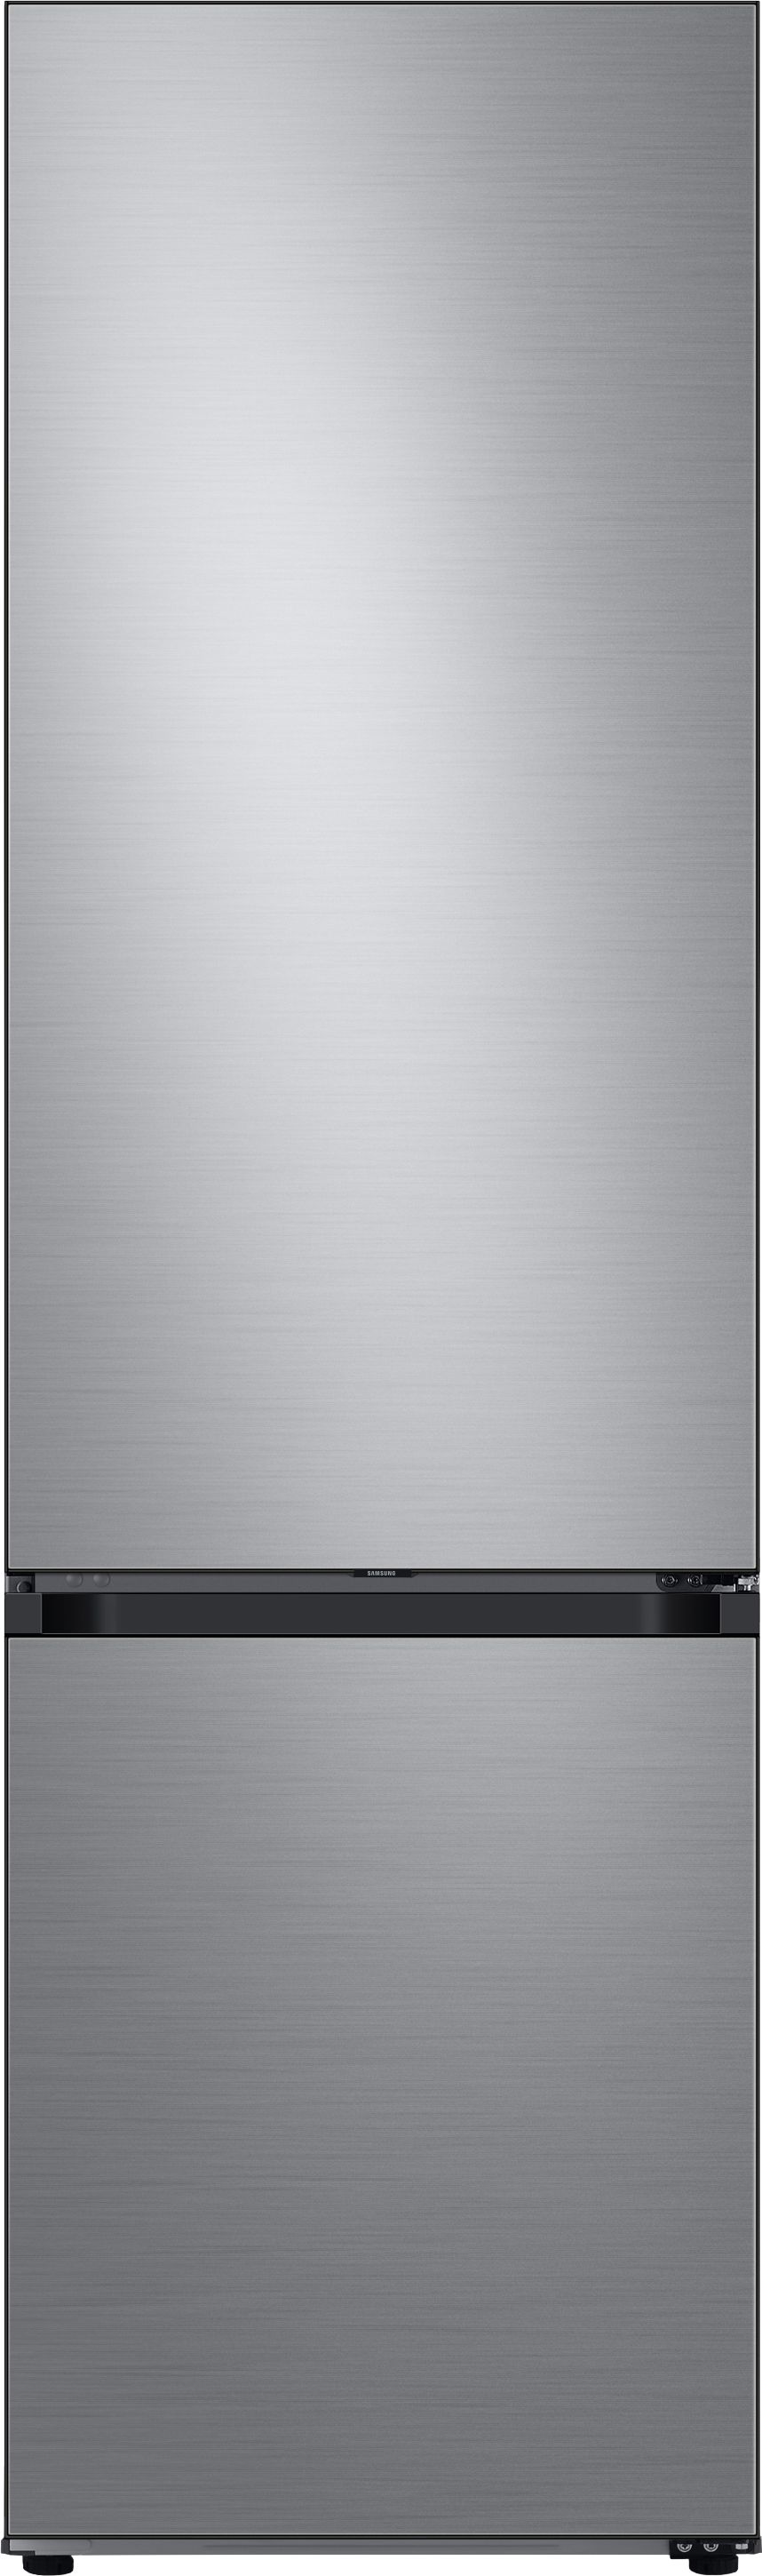 Samsung Bespoke Series 8 RB38C7B5CS9 60/40 No Frost Fridge Freezer - Silver - C Rated, Silver